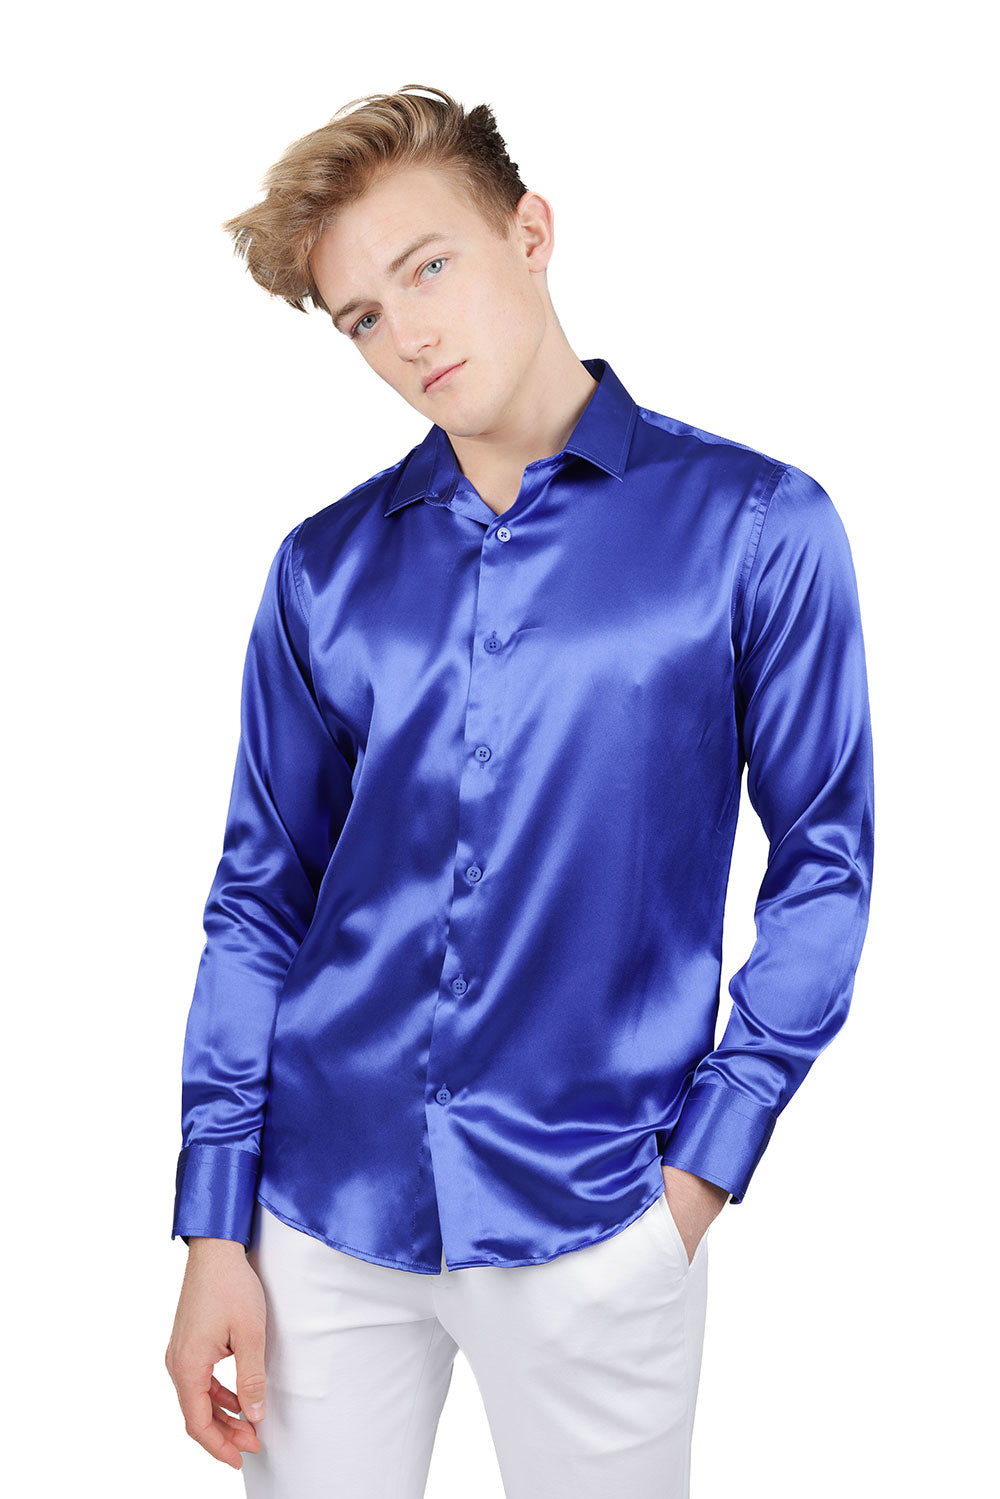 BARABAS Mens Luxury Metallic Long Sleeve Button Down Shiny shirts B312 Royal Blue